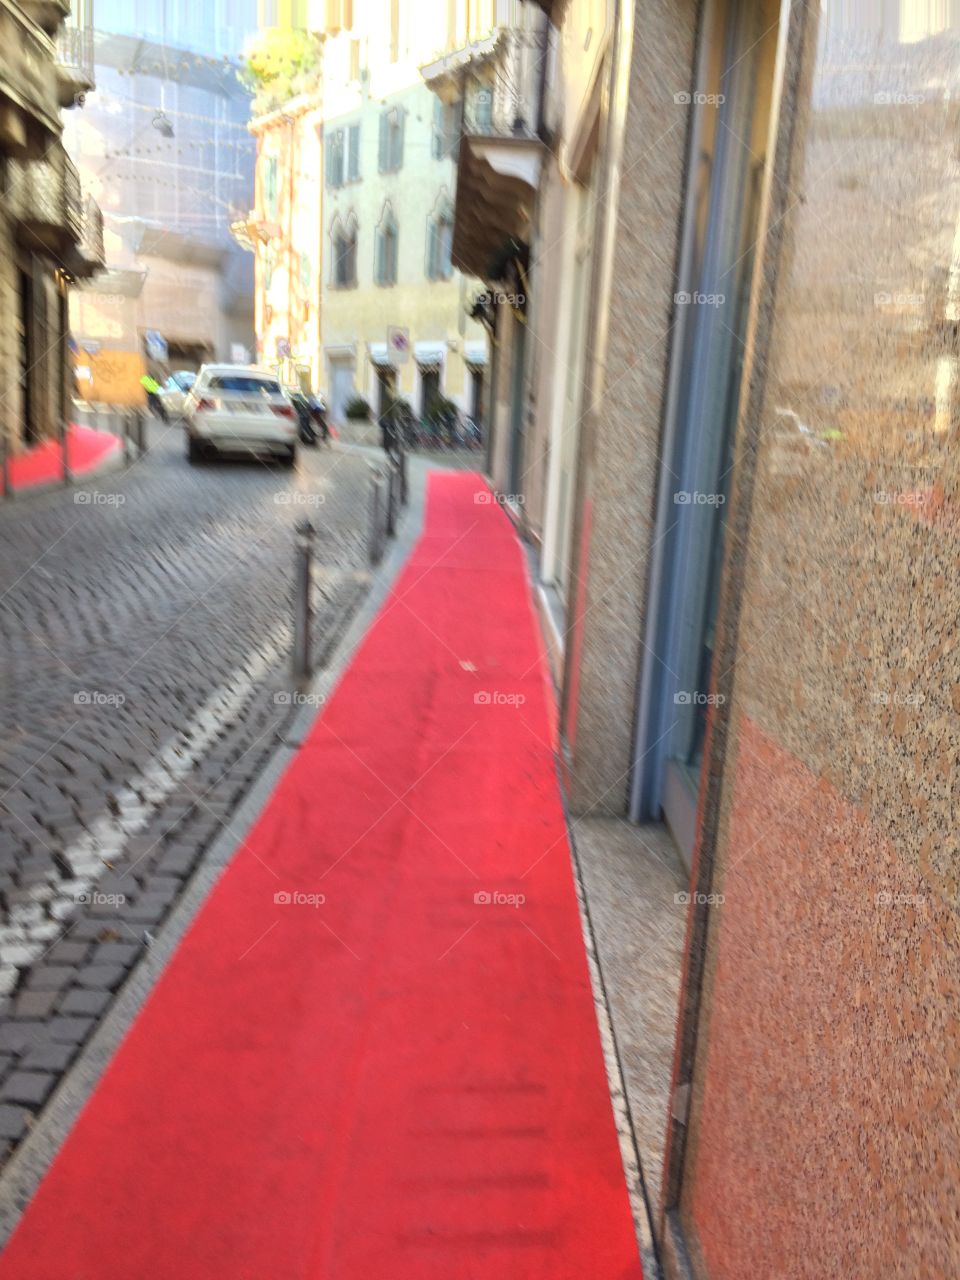 Red Carpet 